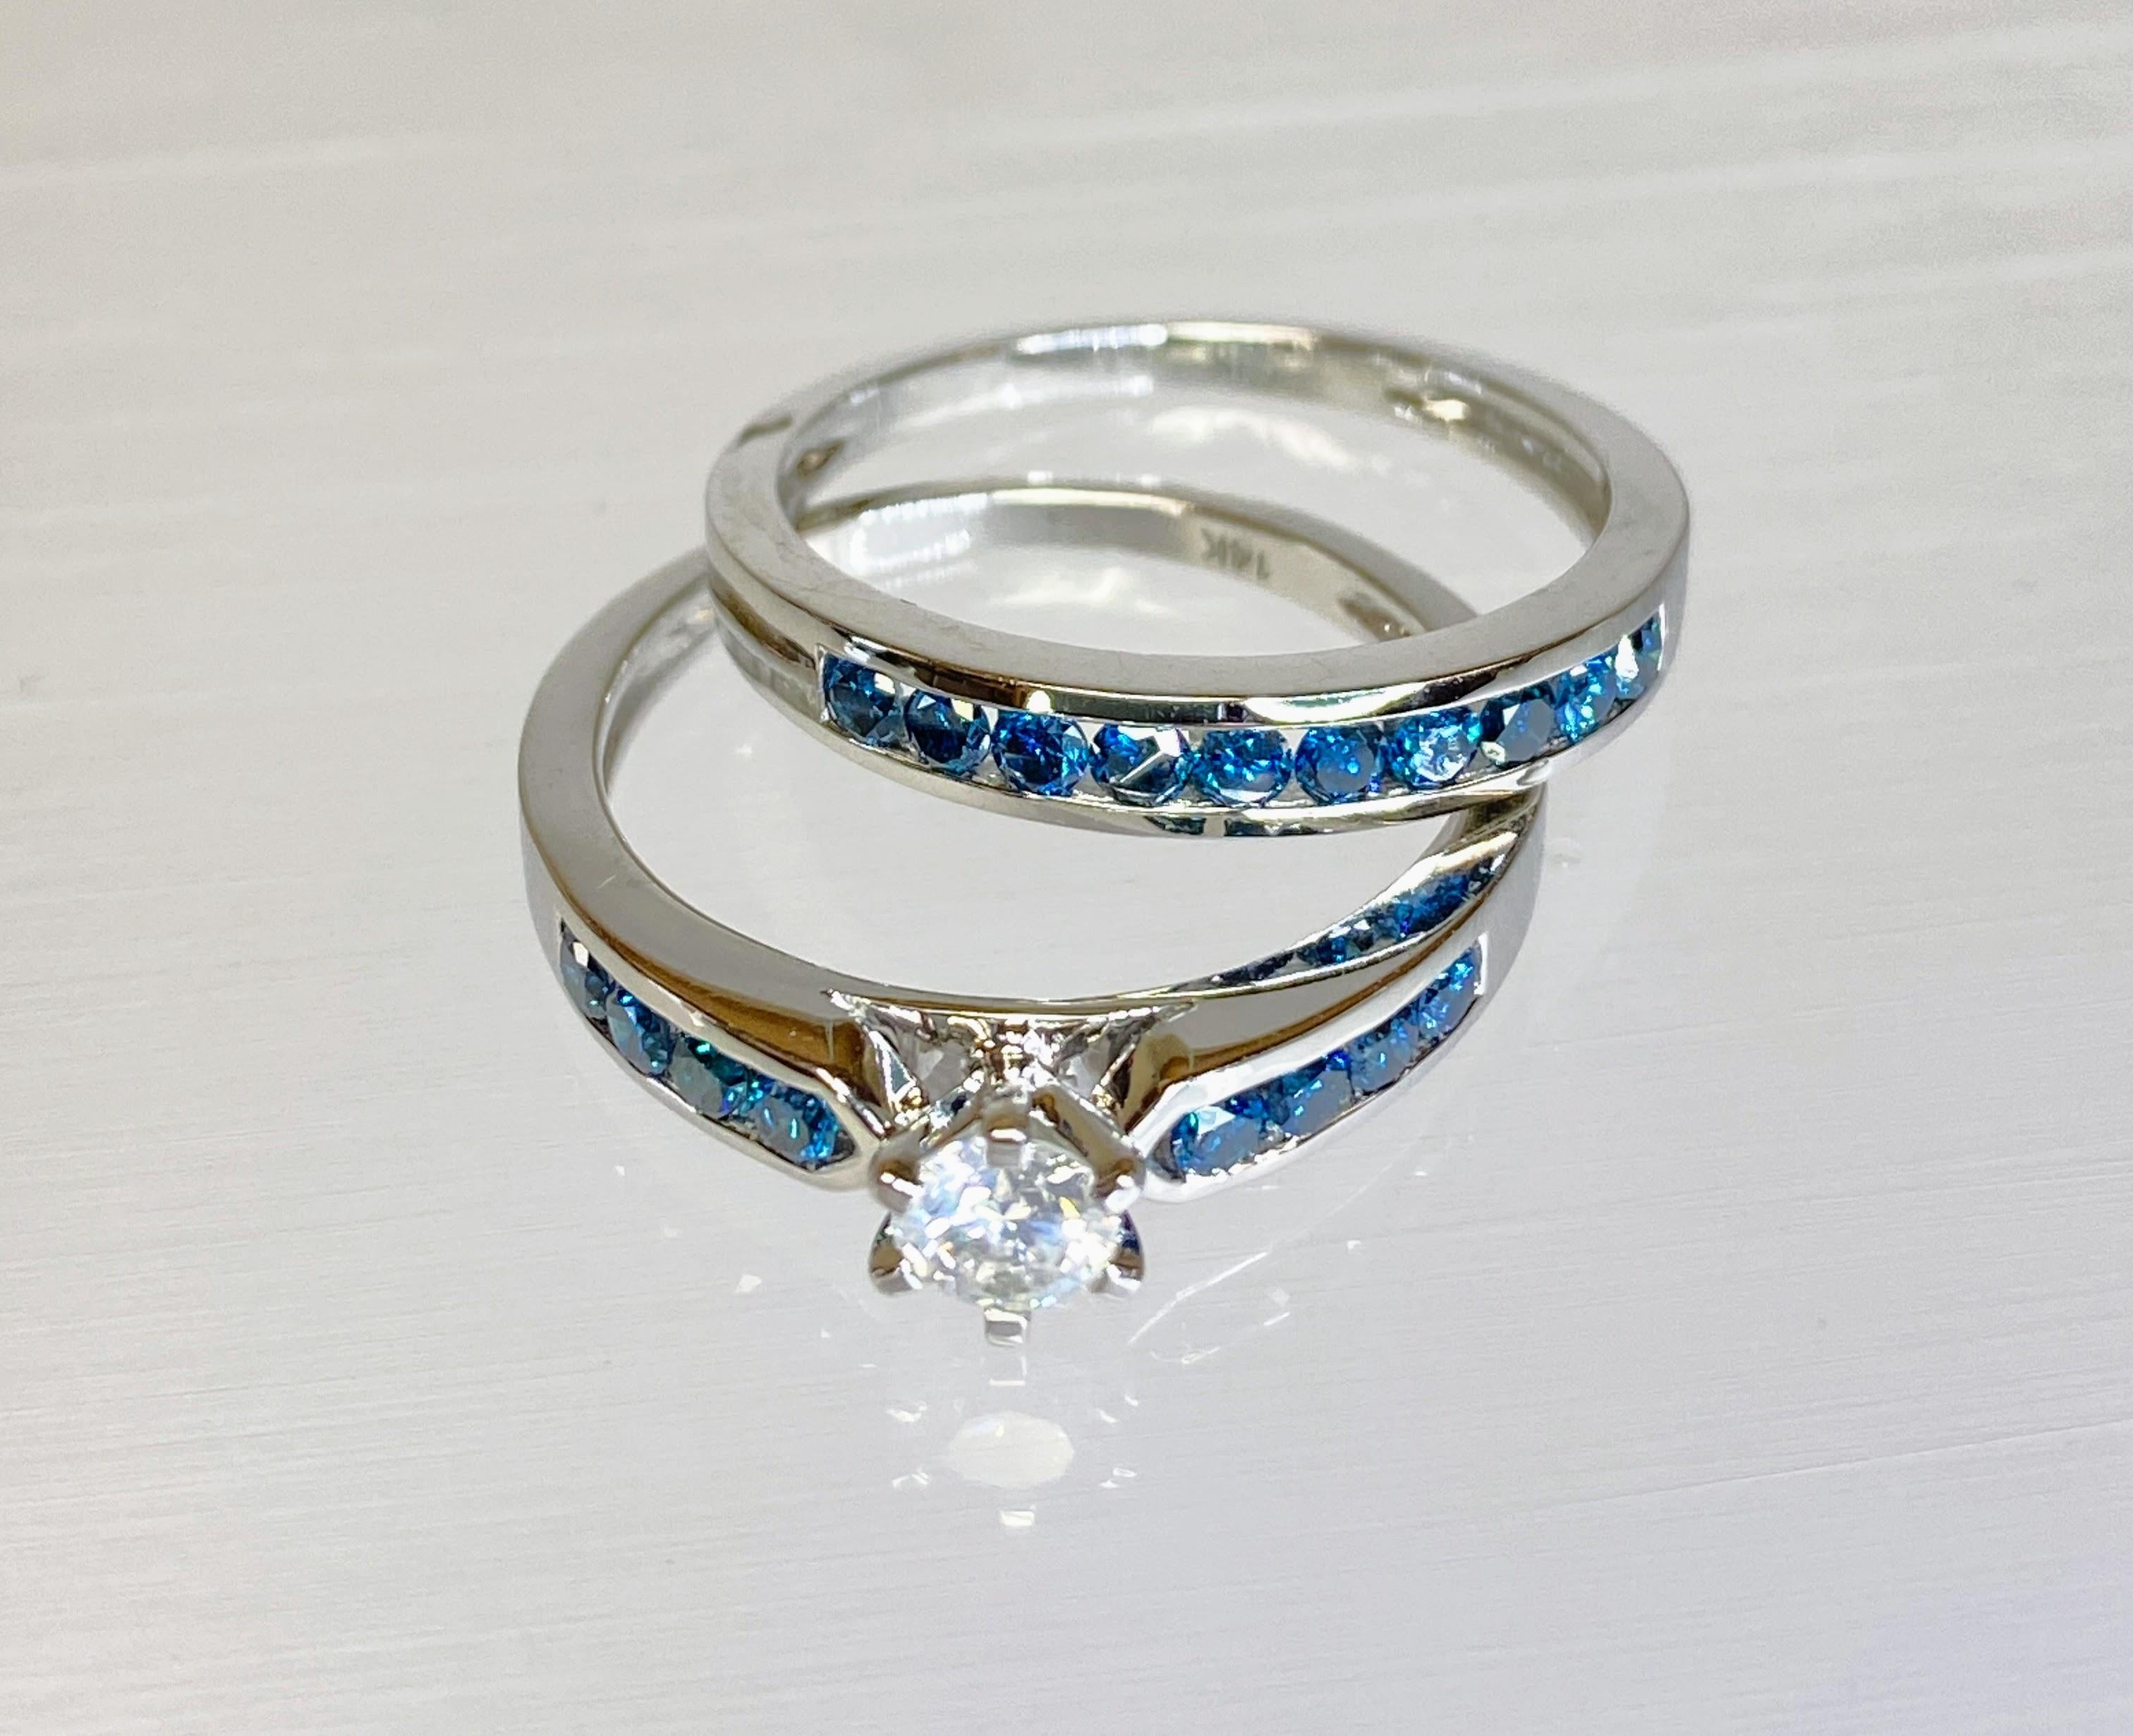 14K White Gold Blue & White Diamond Wedding/ Engagement Ring Set 5.35g

Gorgeous wedding band set. Elegant blue diamonds decorate wedding band for a simple, yet glamorous design. Engagement ring features a white diamond that is celebrated with